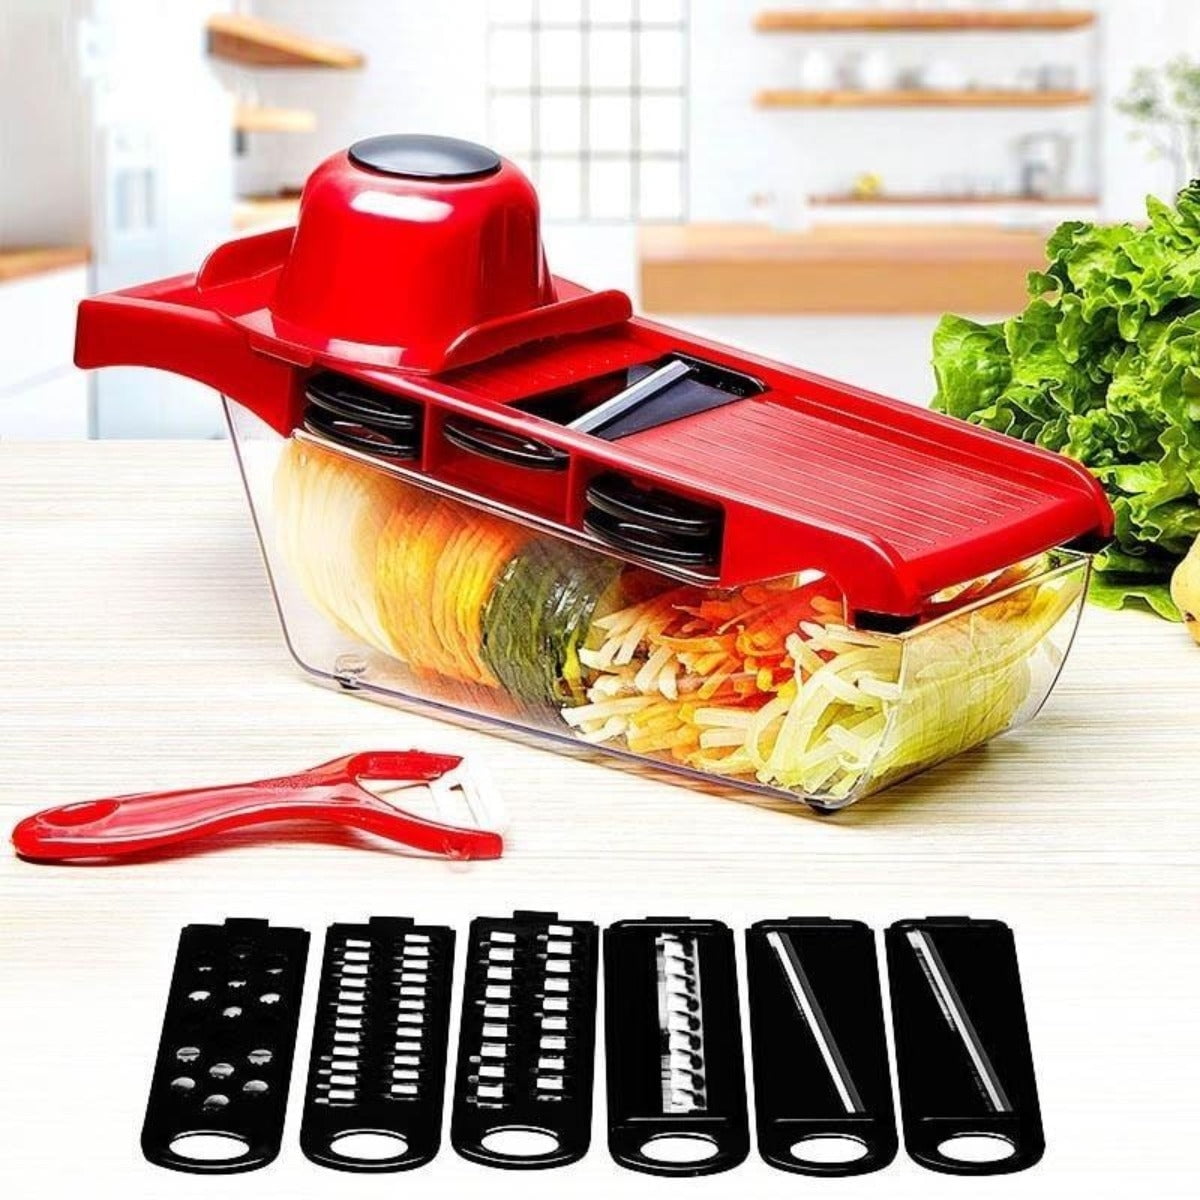 Visland Handheld Vegetable Slicer Cutter,Stainless Steel Vegetable